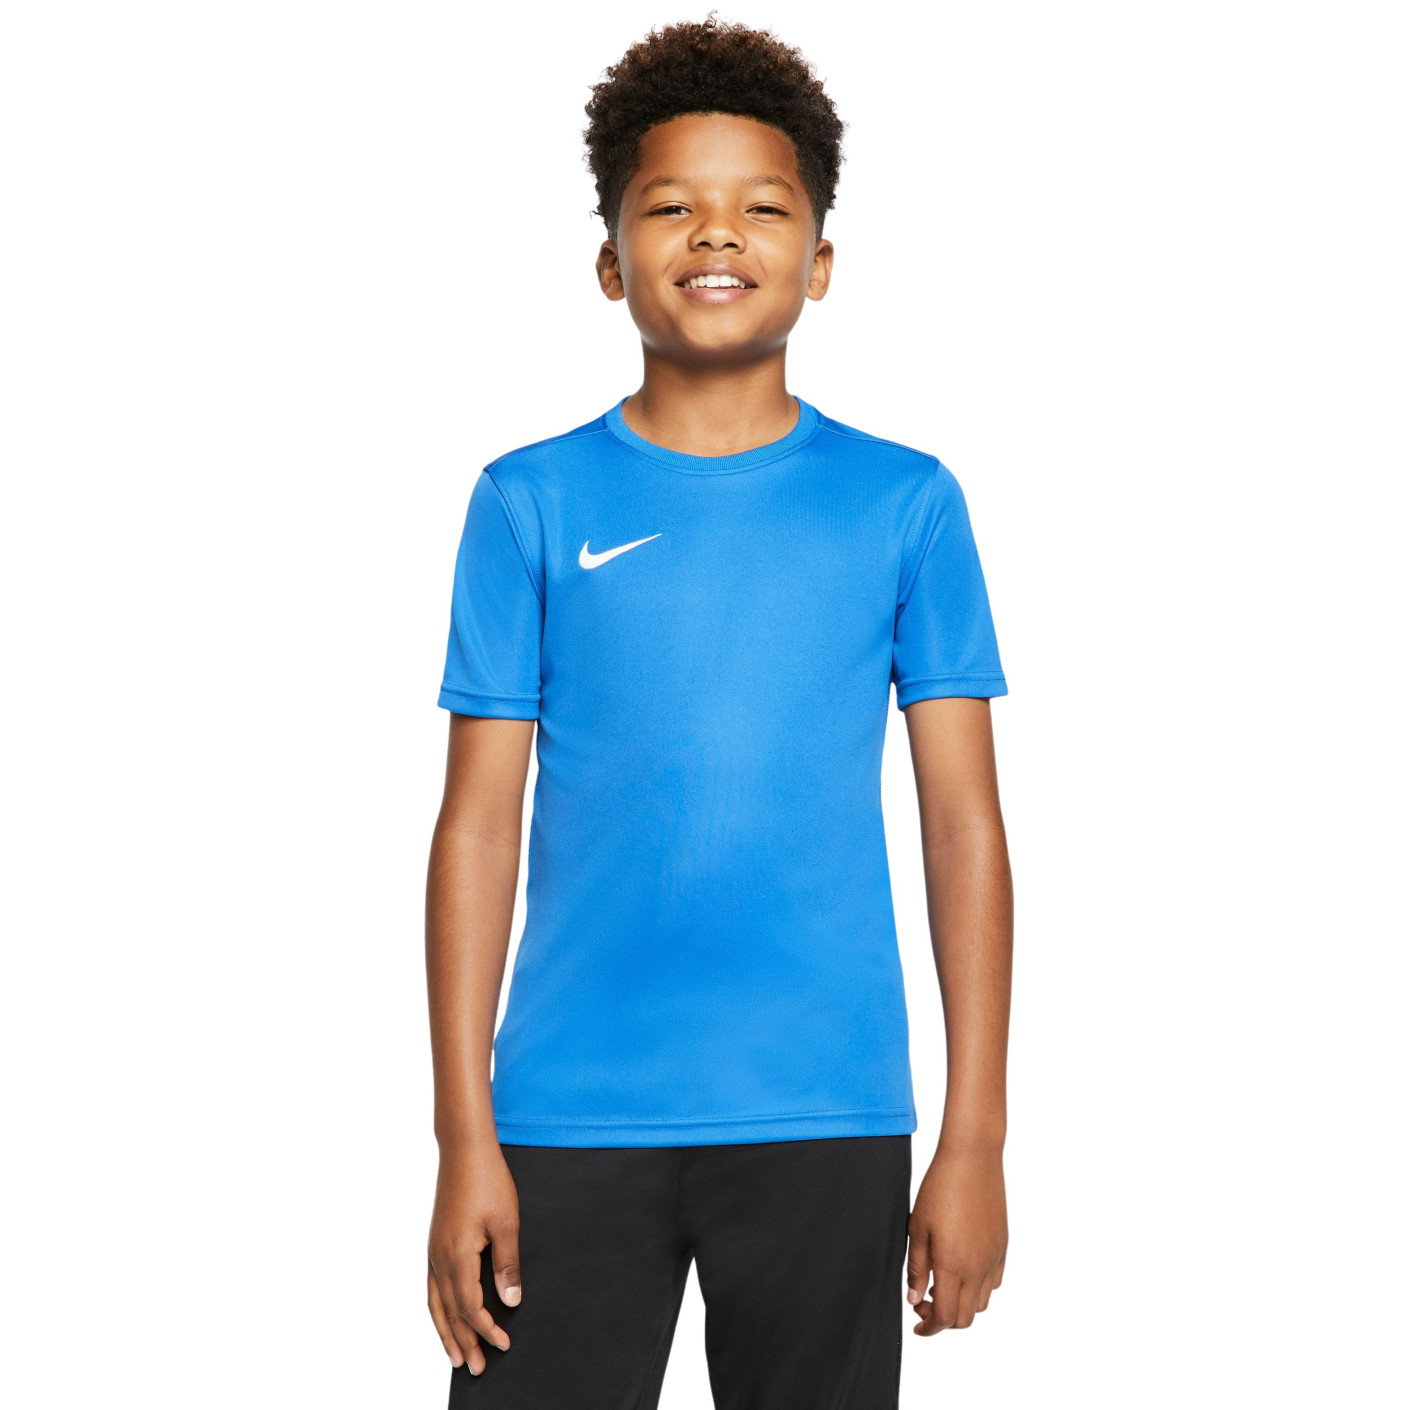 spanning Vergevingsgezind filosoof Nike Dry Park VII Voetbalshirt Kids Royal Blauw